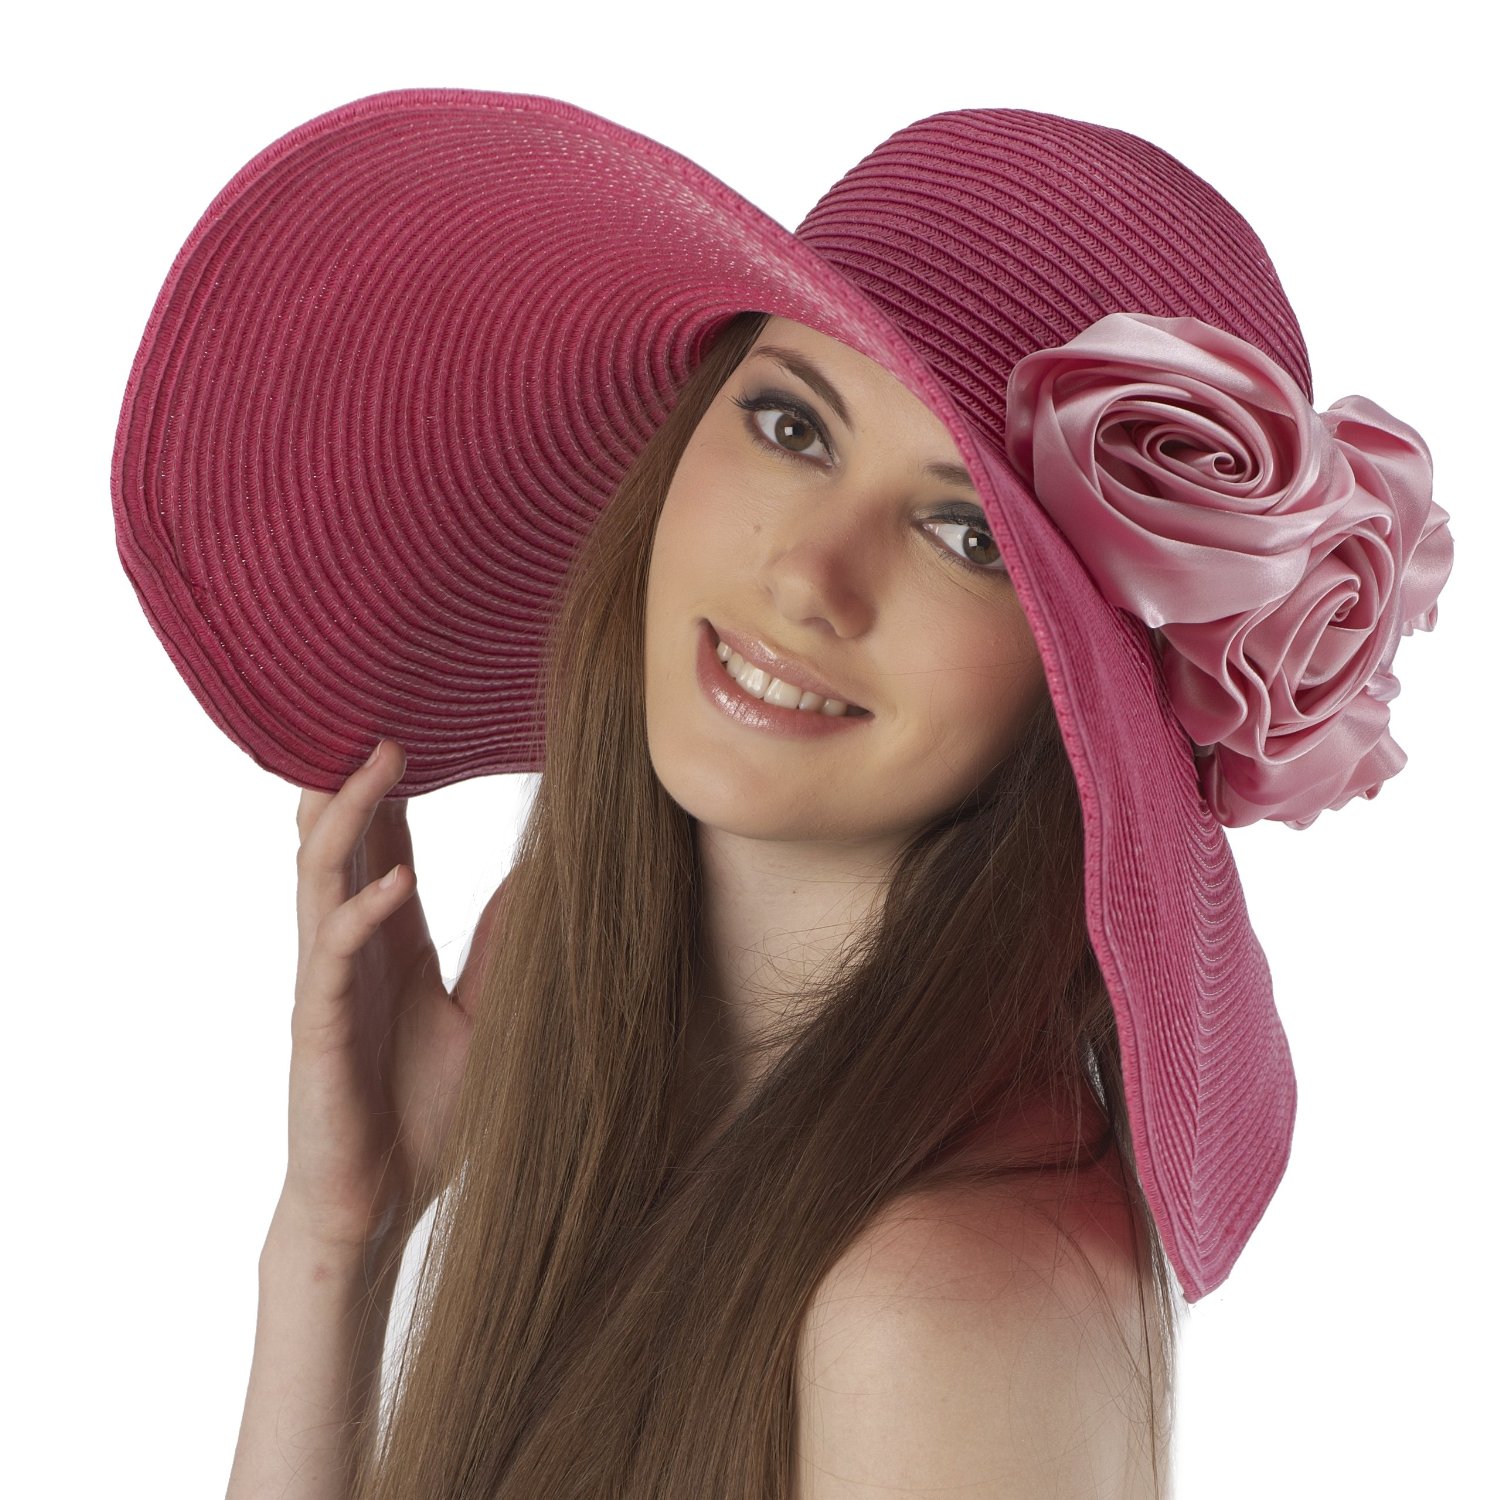 Emoo Fashion: Summer Hats for 2012